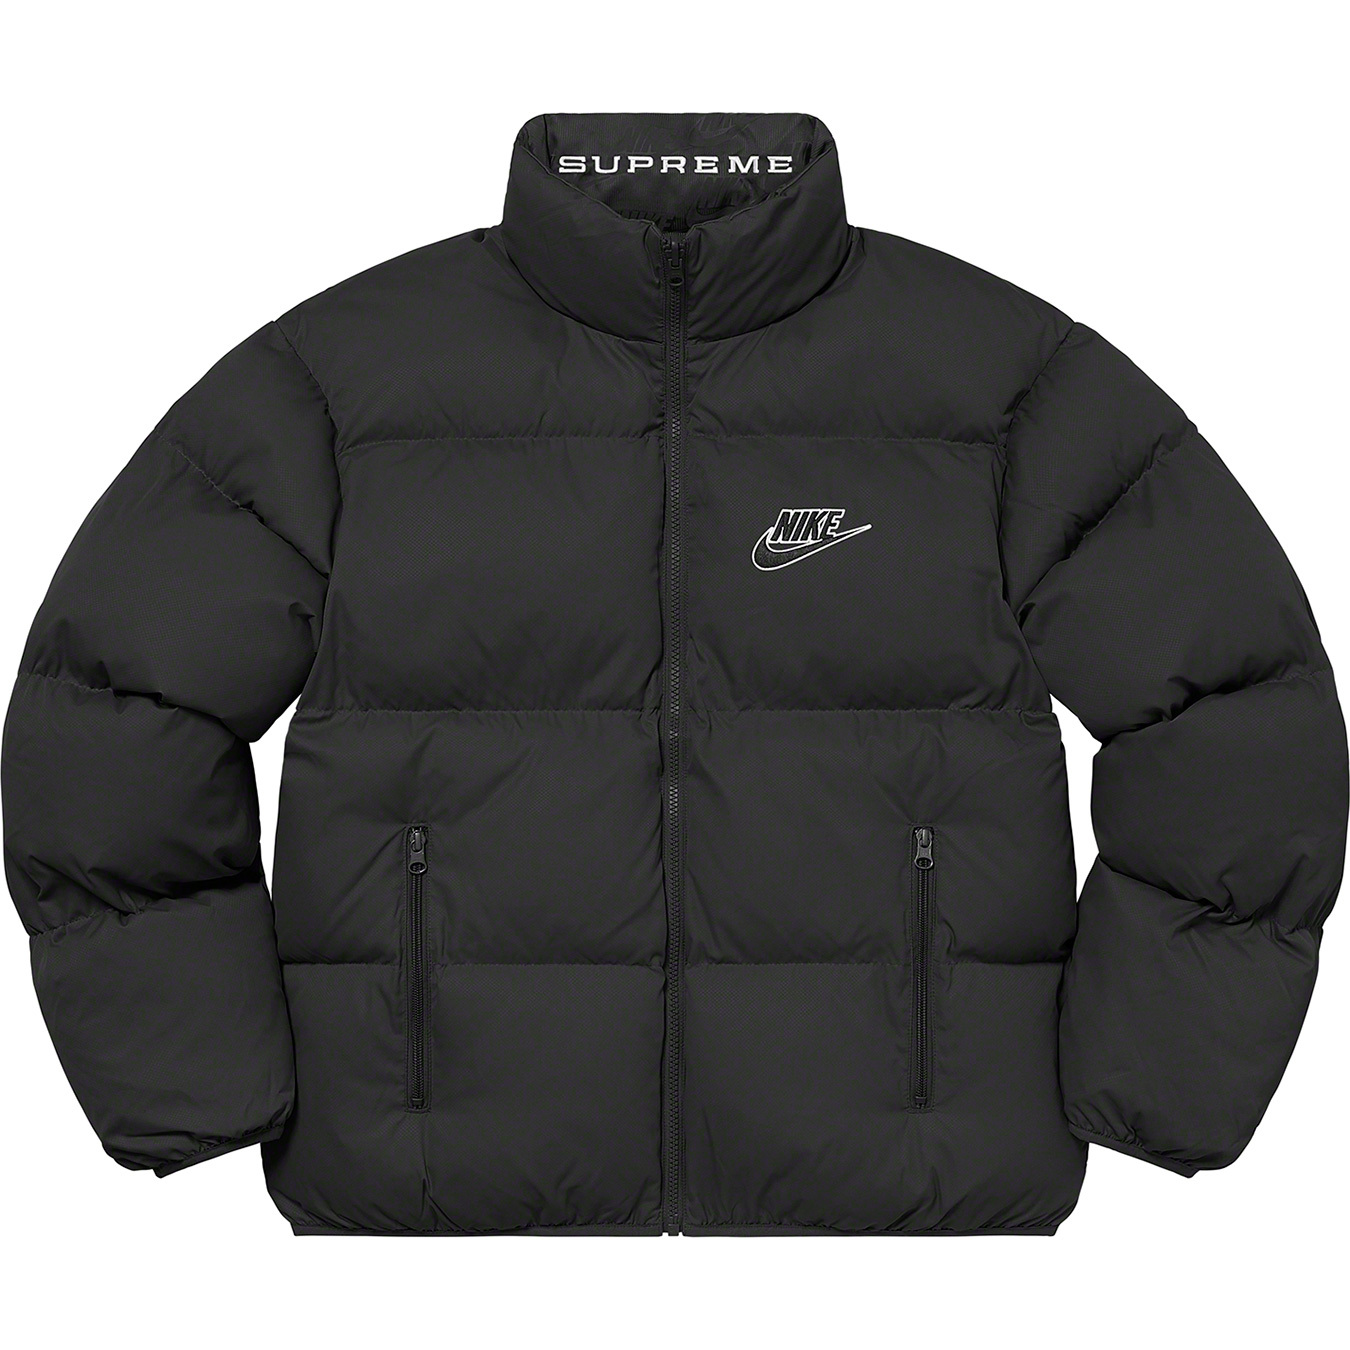 Supreme / Nike® Reversible Puffy Jacket